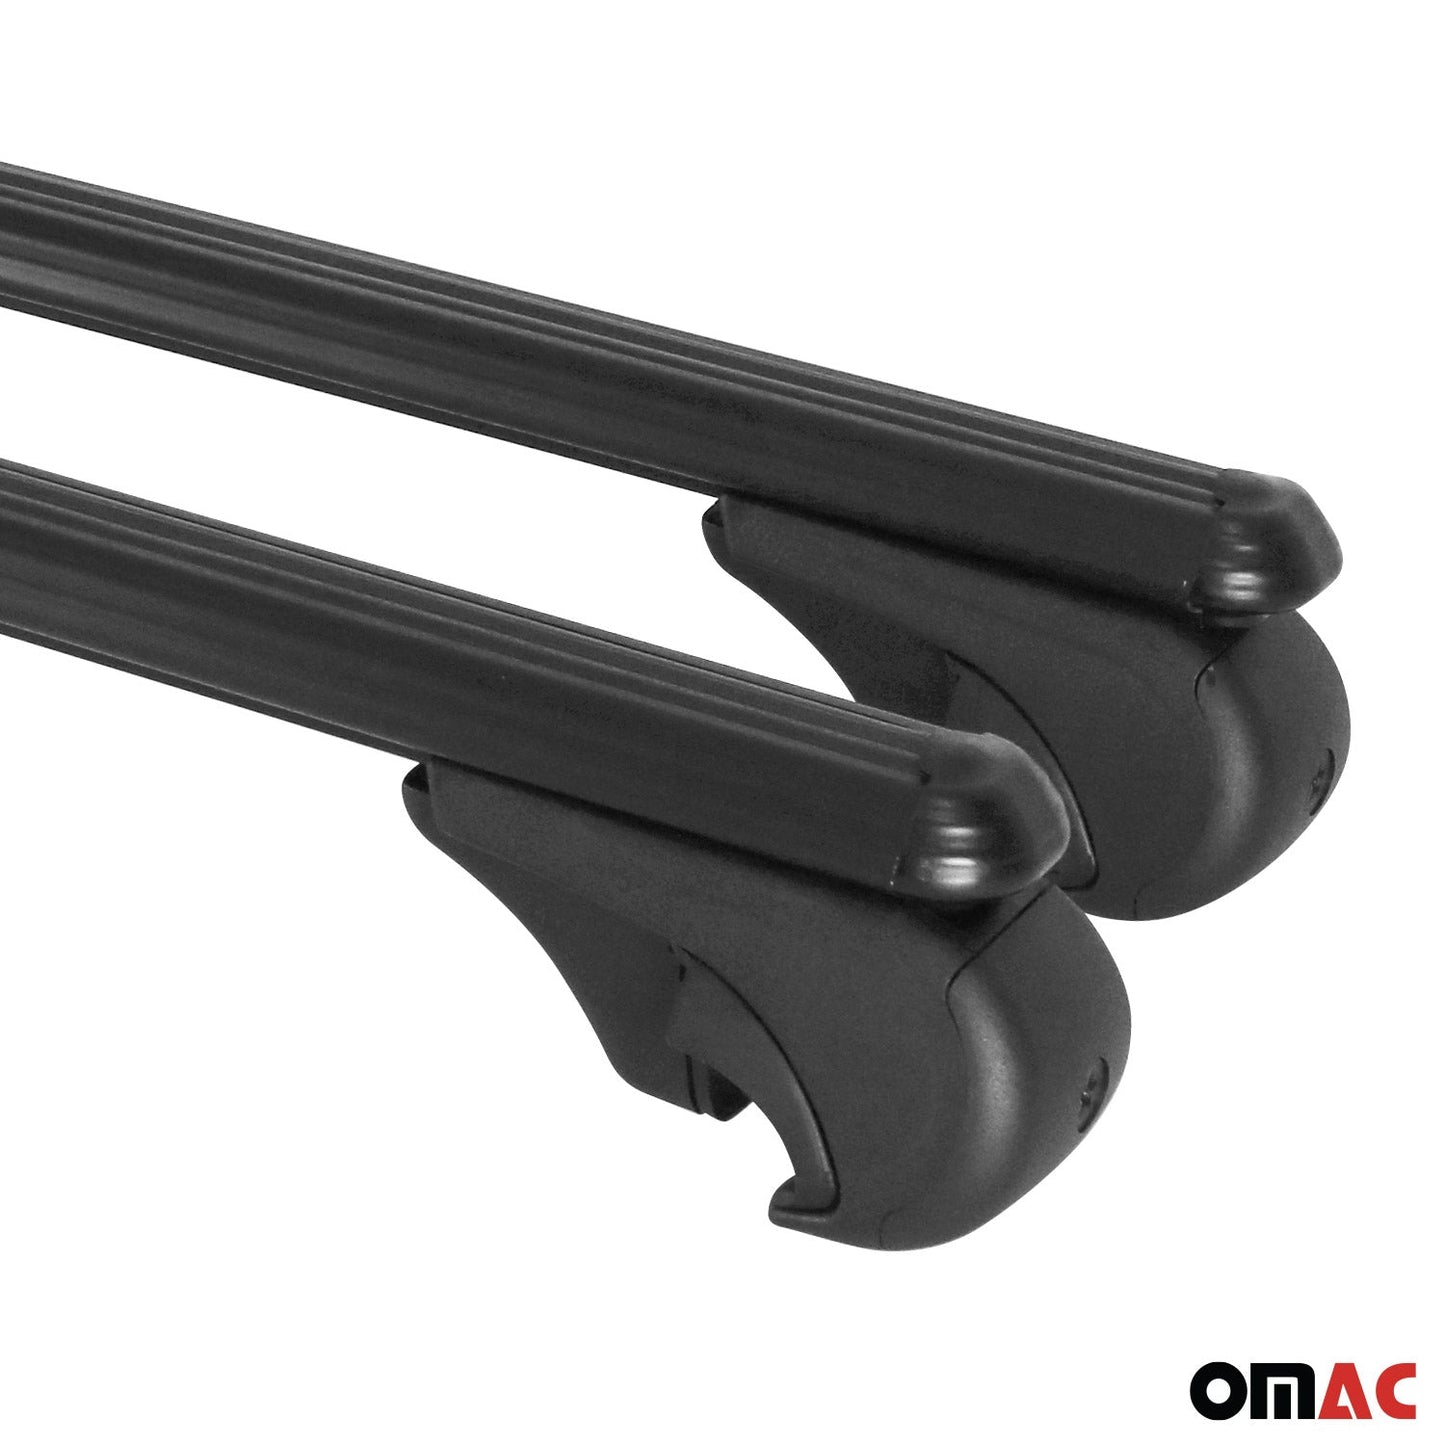 OMAC Lockable Roof Rack Cross Bars Luggage Carrier for Dodge Durango 2007-2009 Black 19059696929MB